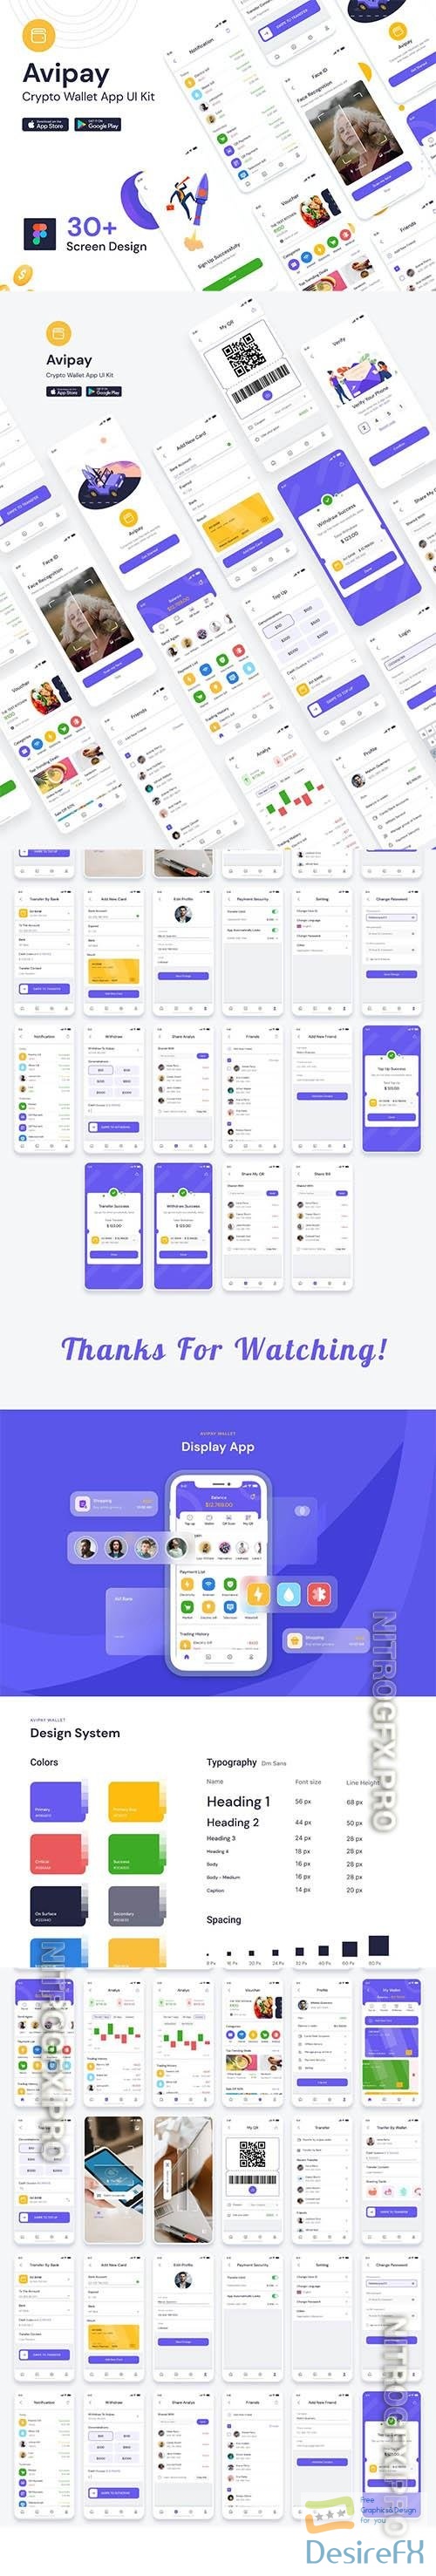 Avipay | Wallet Financial App Mobile